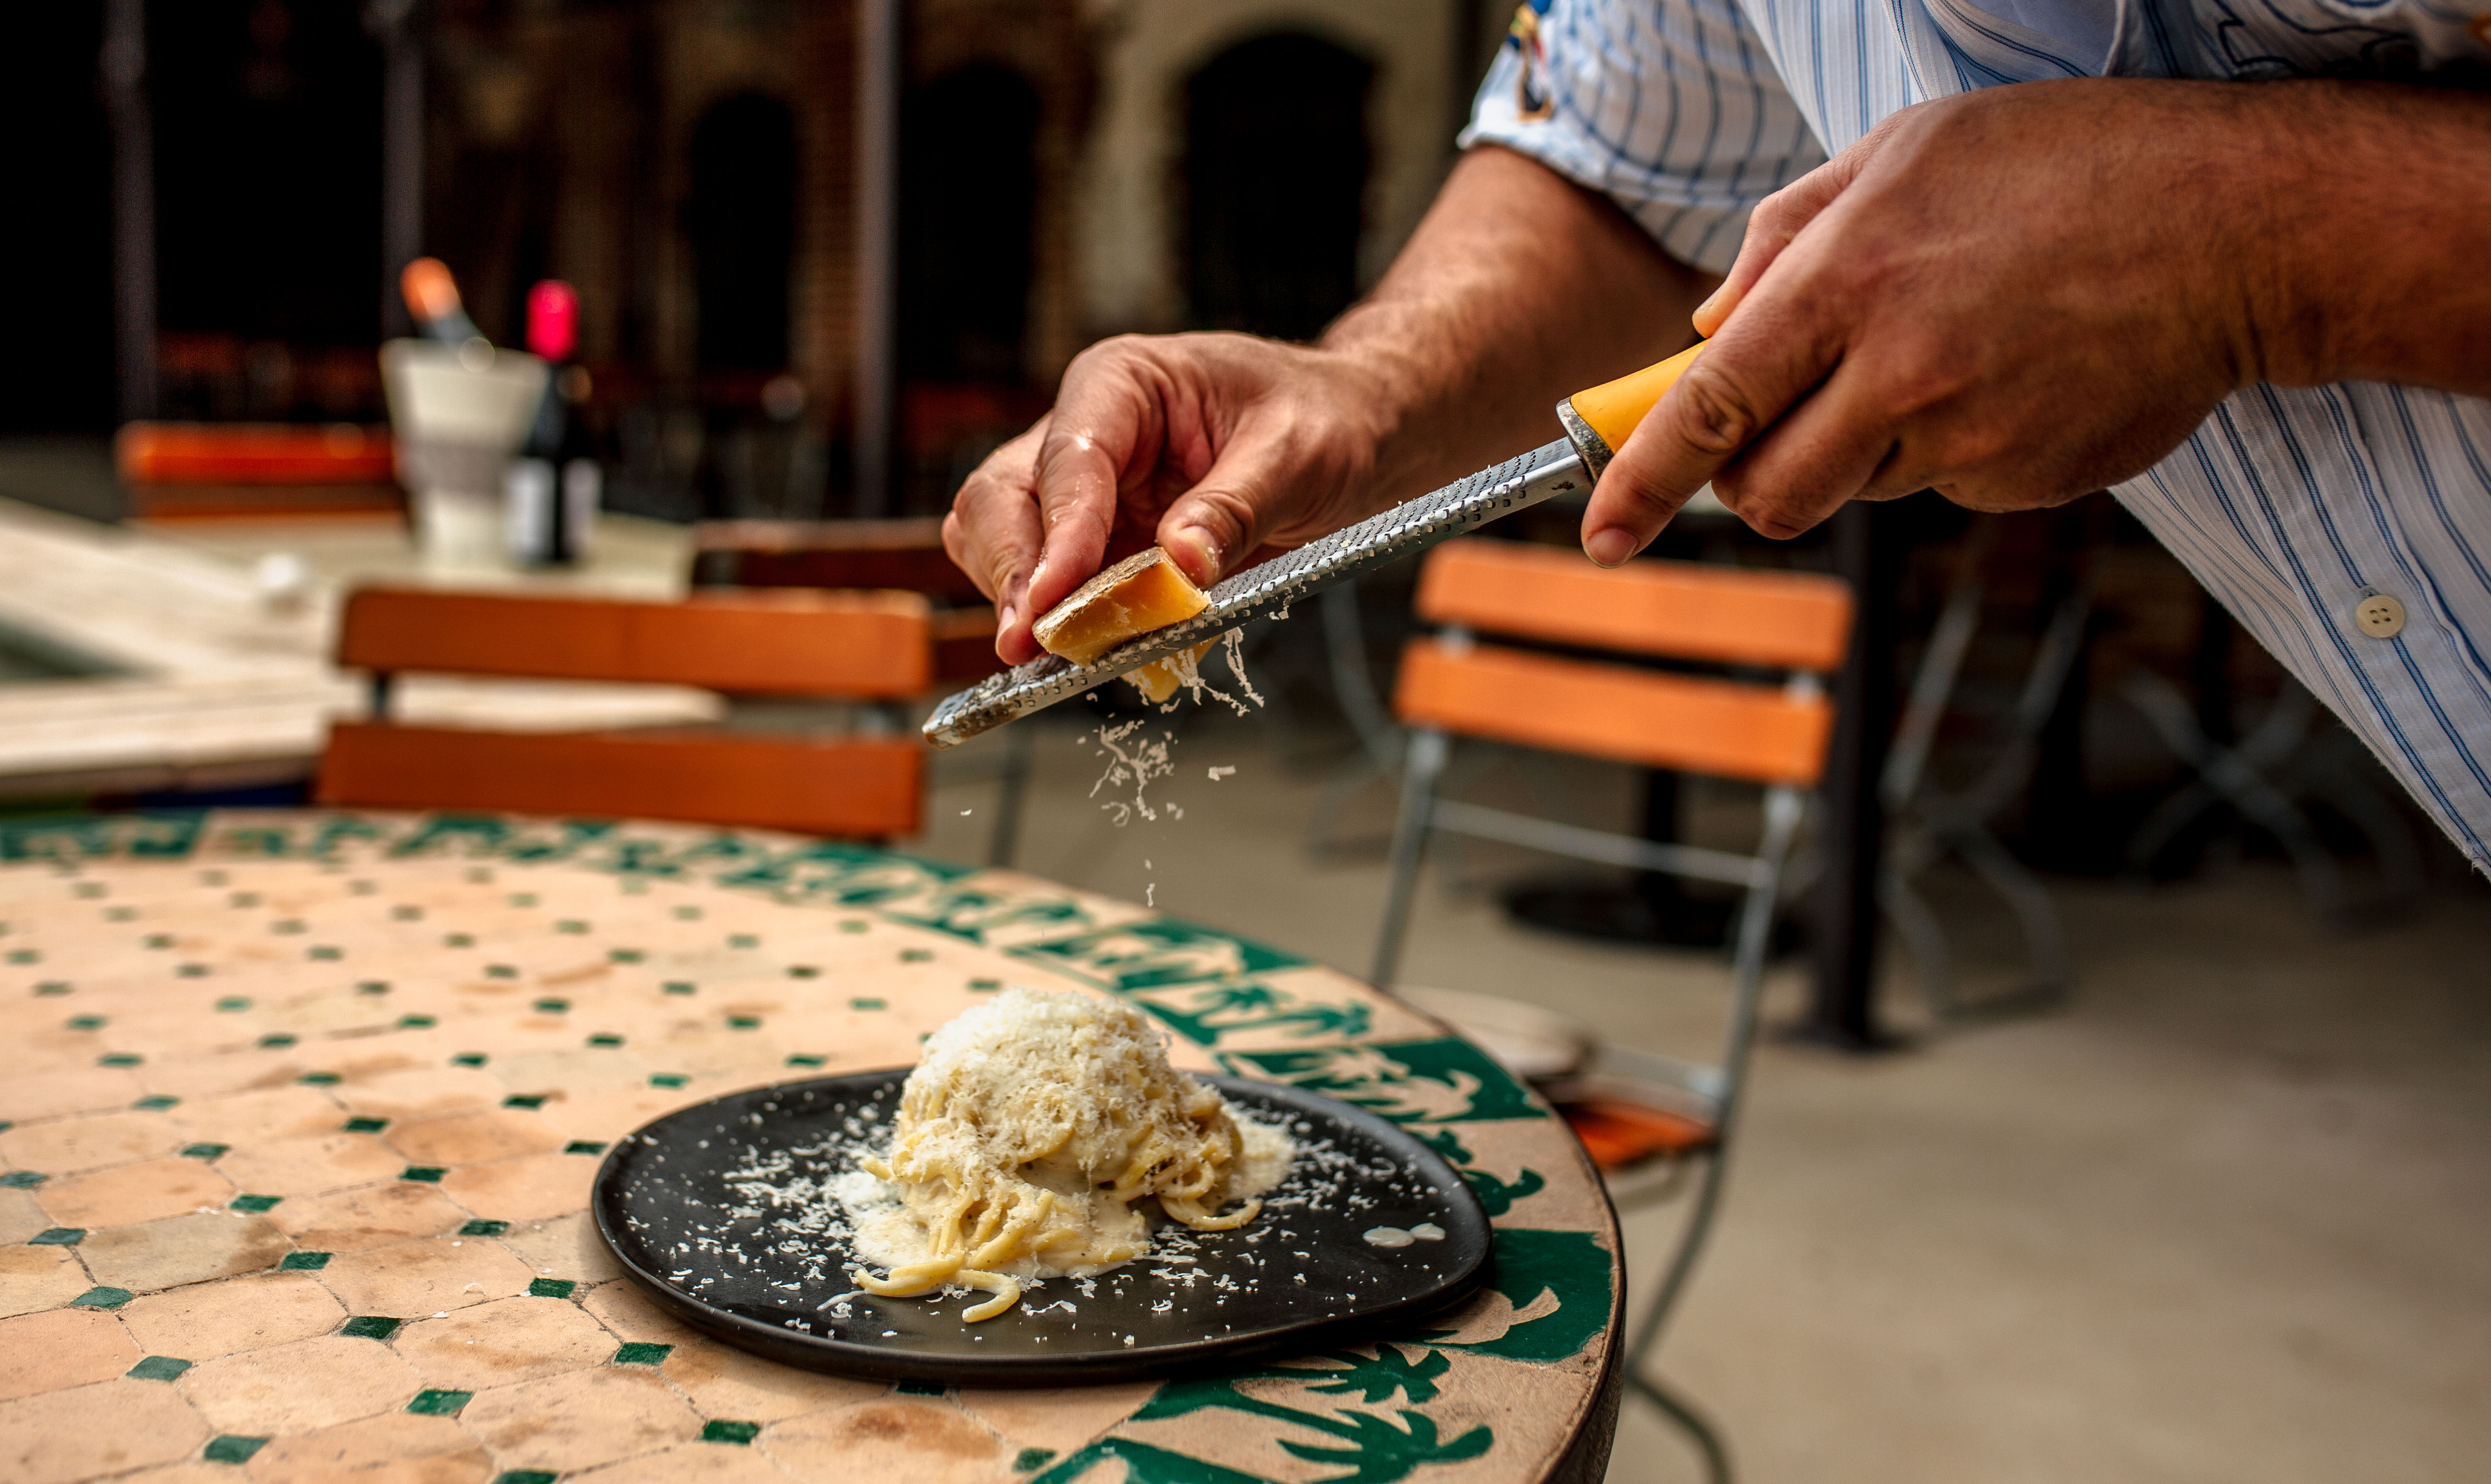 House-Made Pasta at Mulino. Photography by Jamie Robbins.